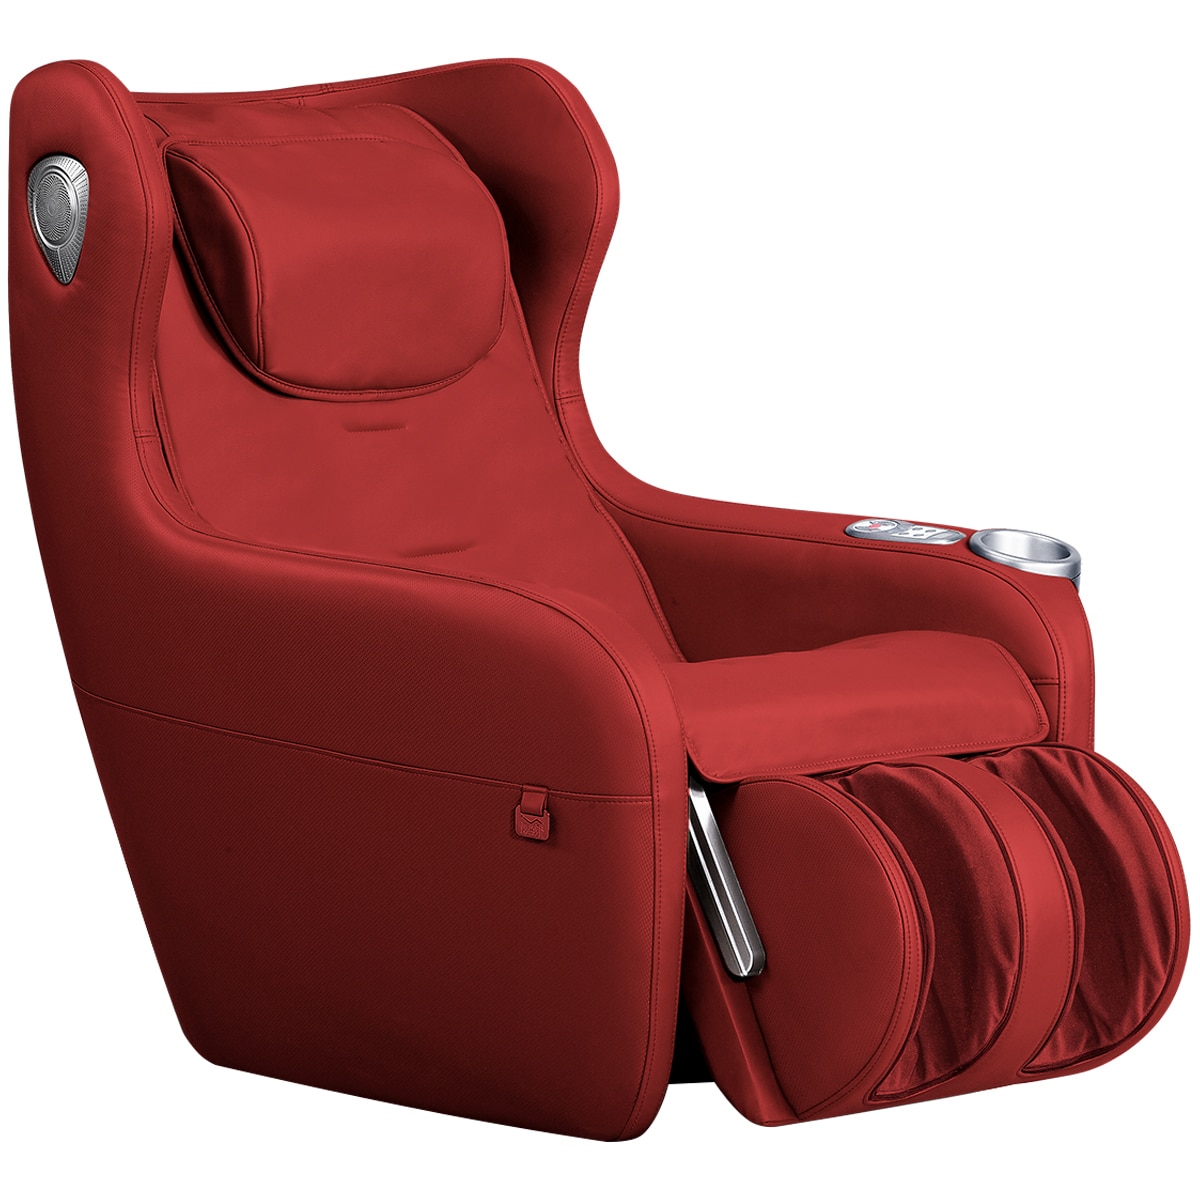 Masseuse Massage Chairs Health Massage Chair Red | Costco Australia